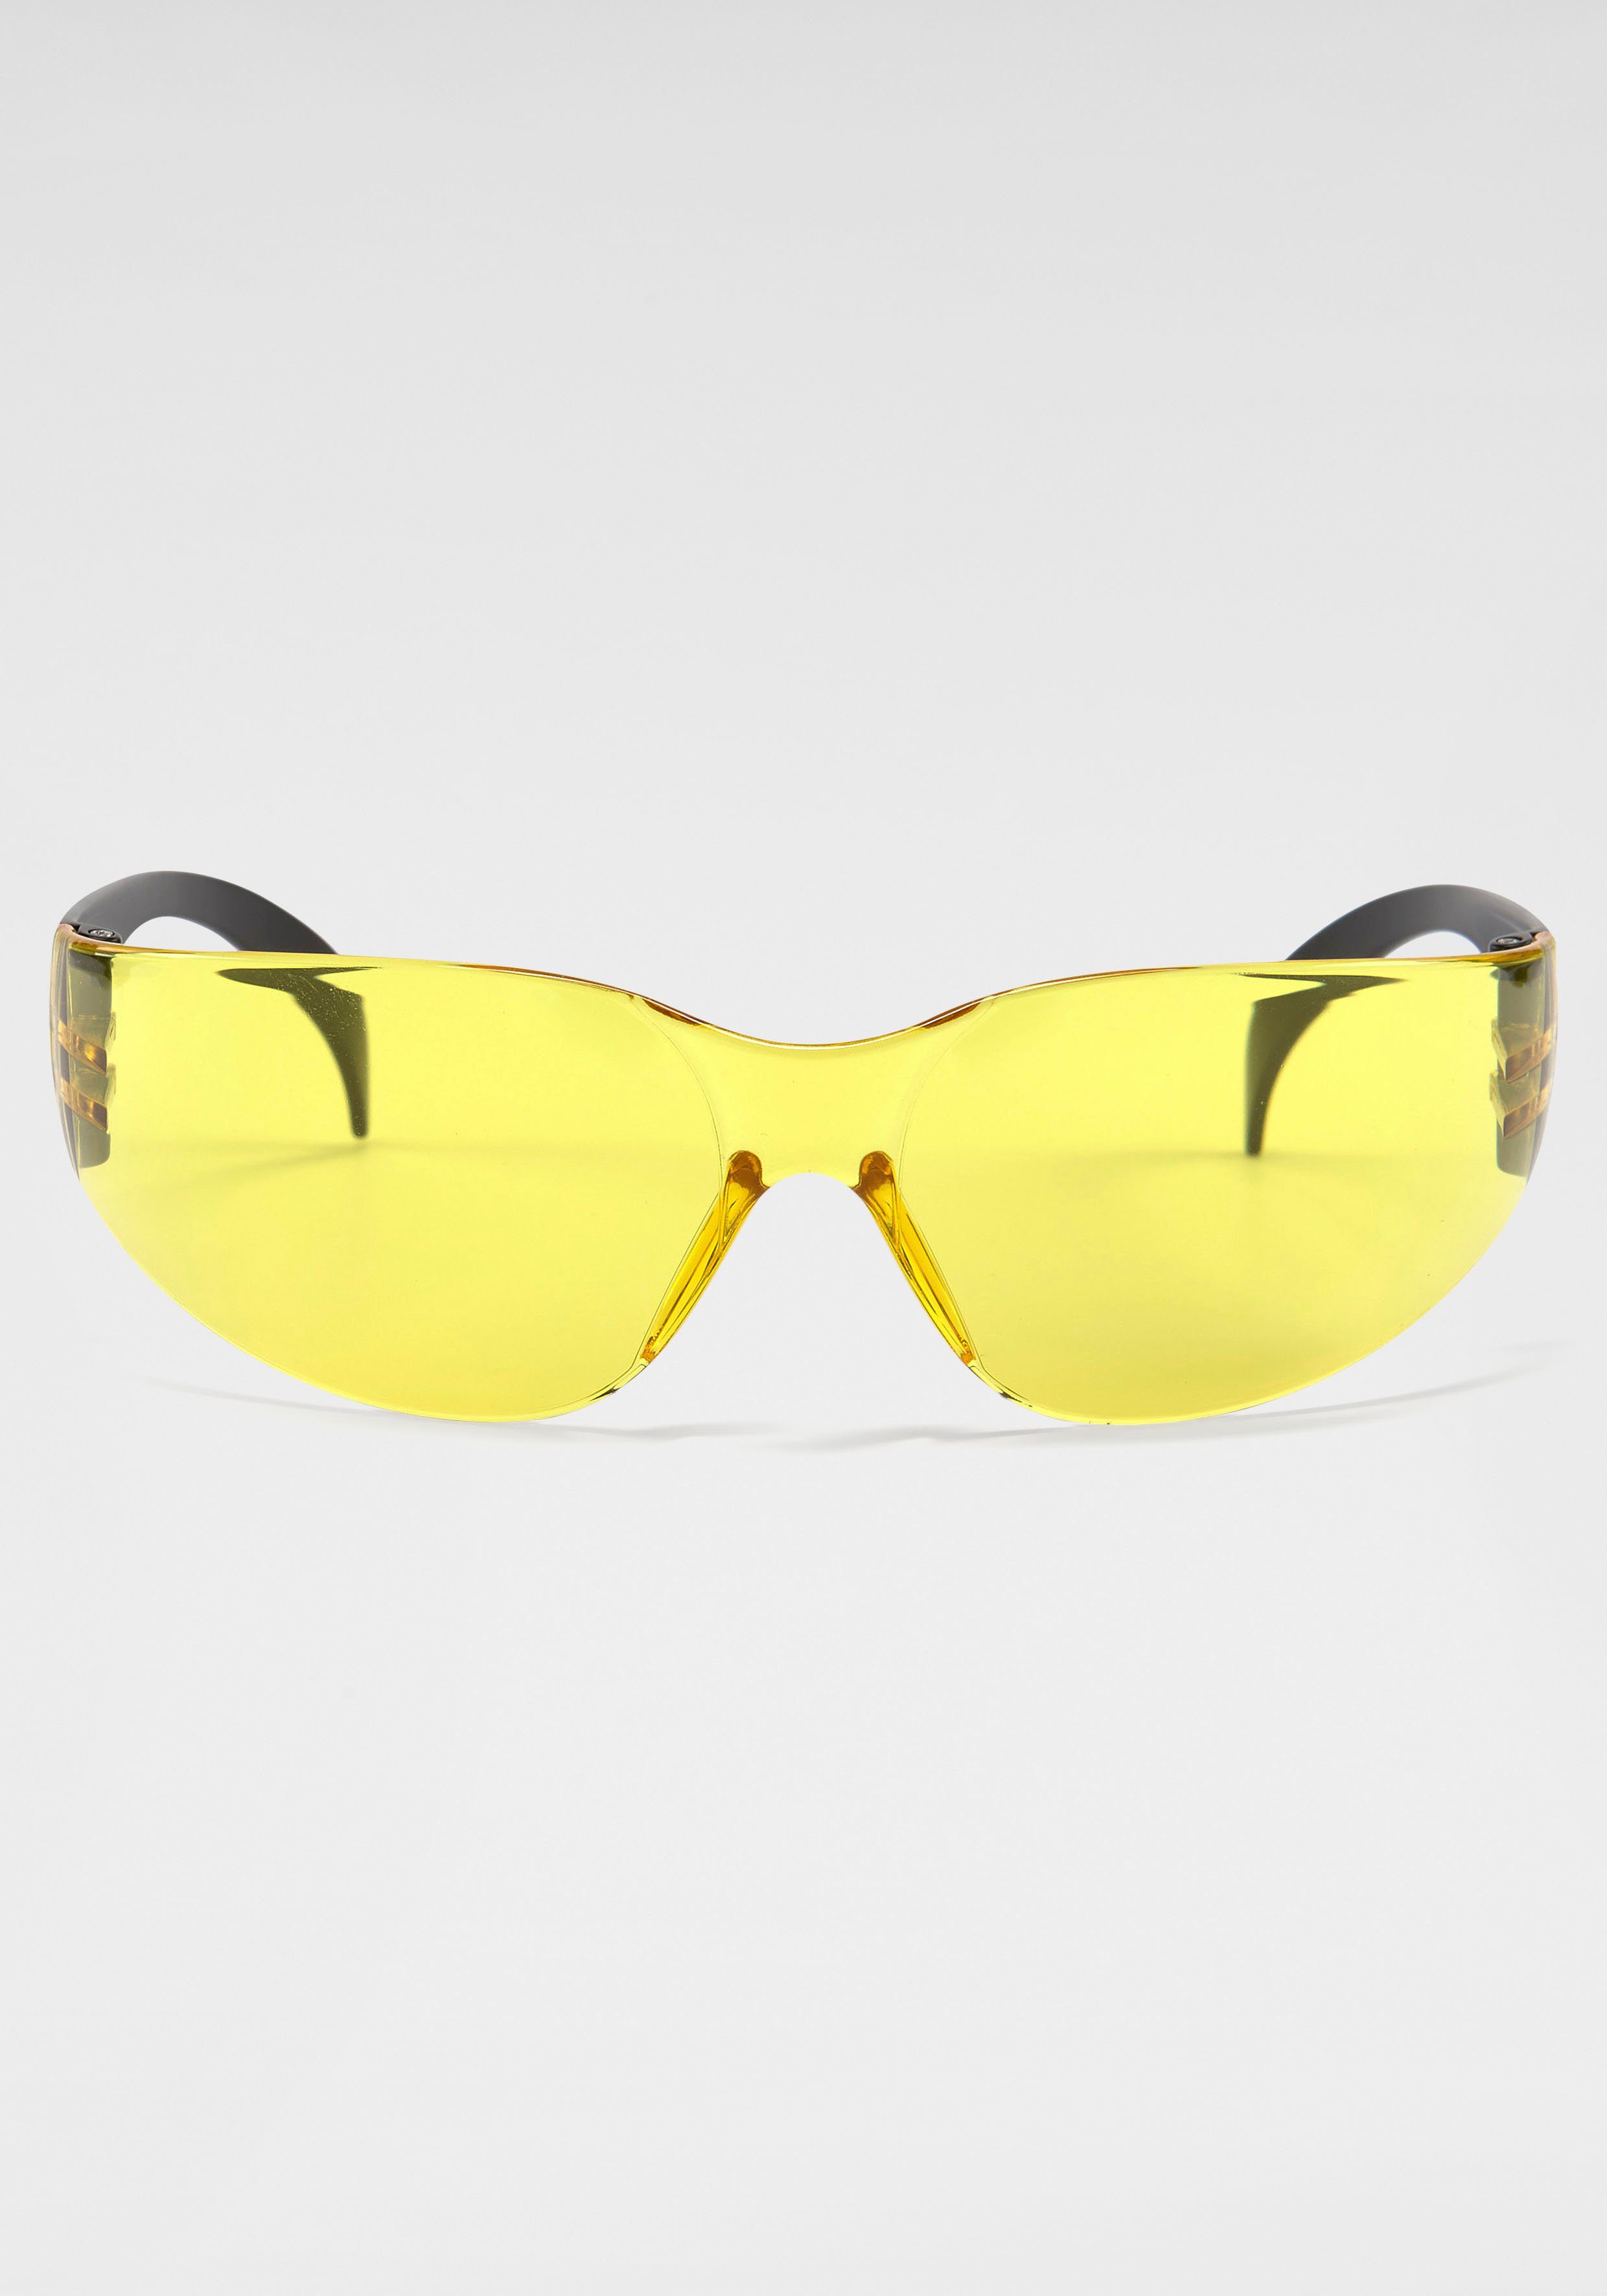 Sonnenbrille BACK IN Randlos gelb BLACK Eyewear